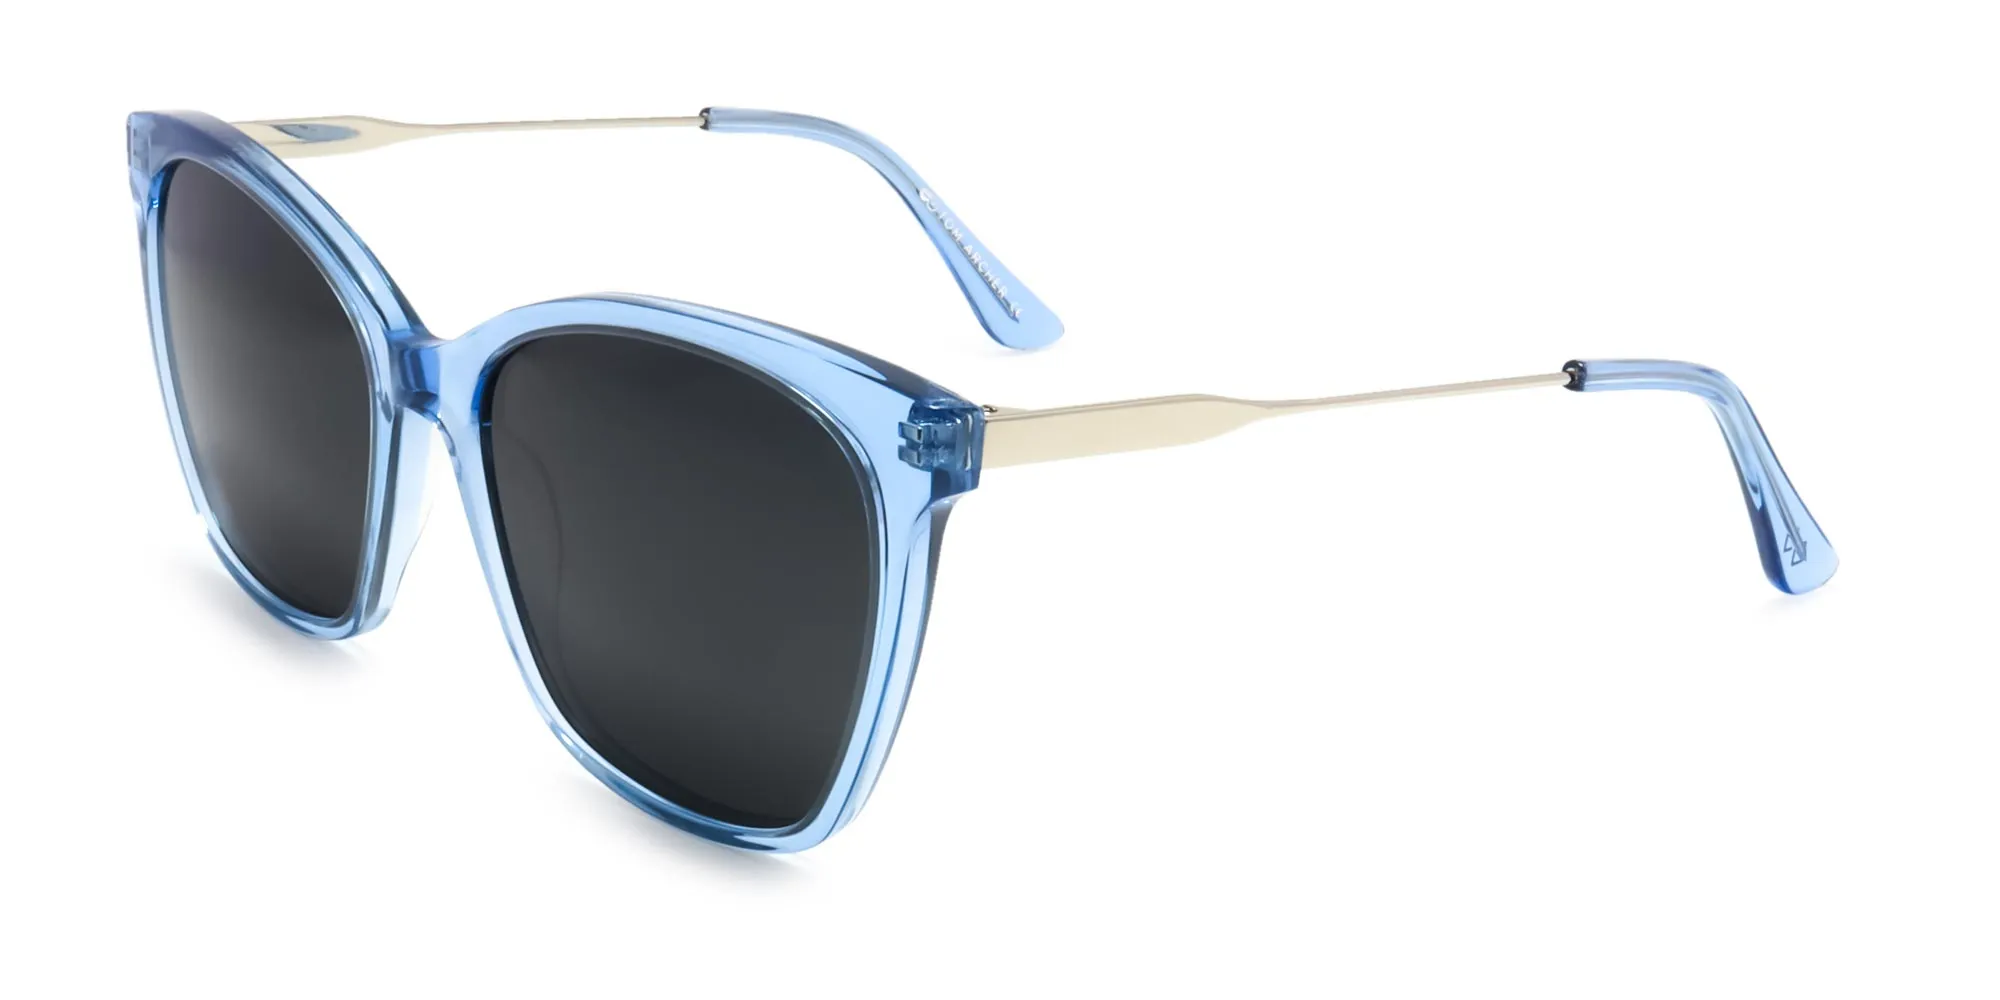 Light Blue Cat Eye Sunglasses